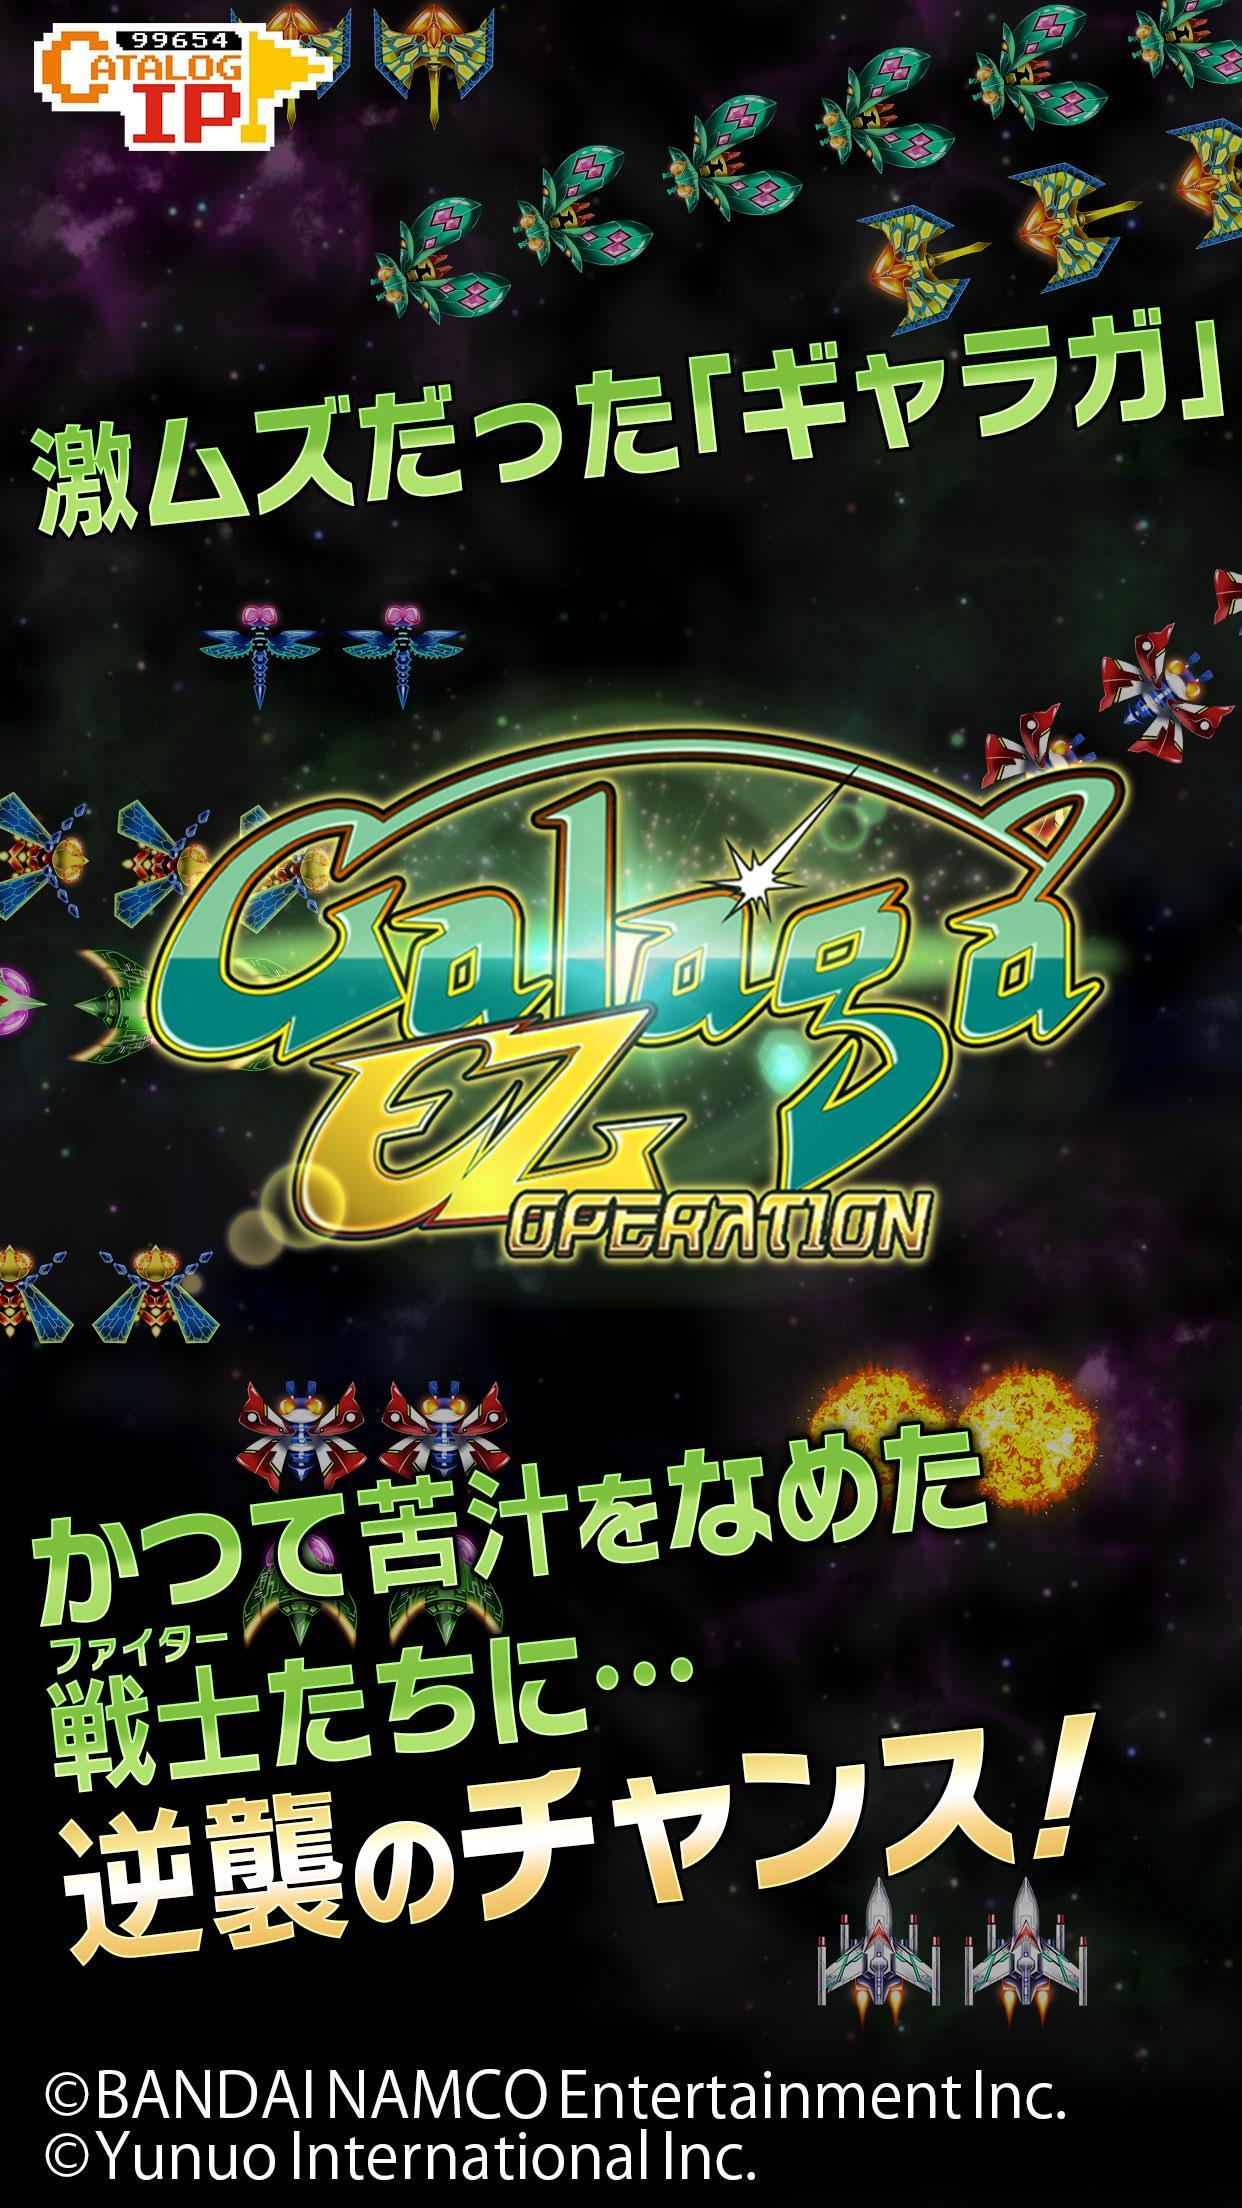 Screenshot 1 of Galaga E.Z.OPERATION 1.0.4